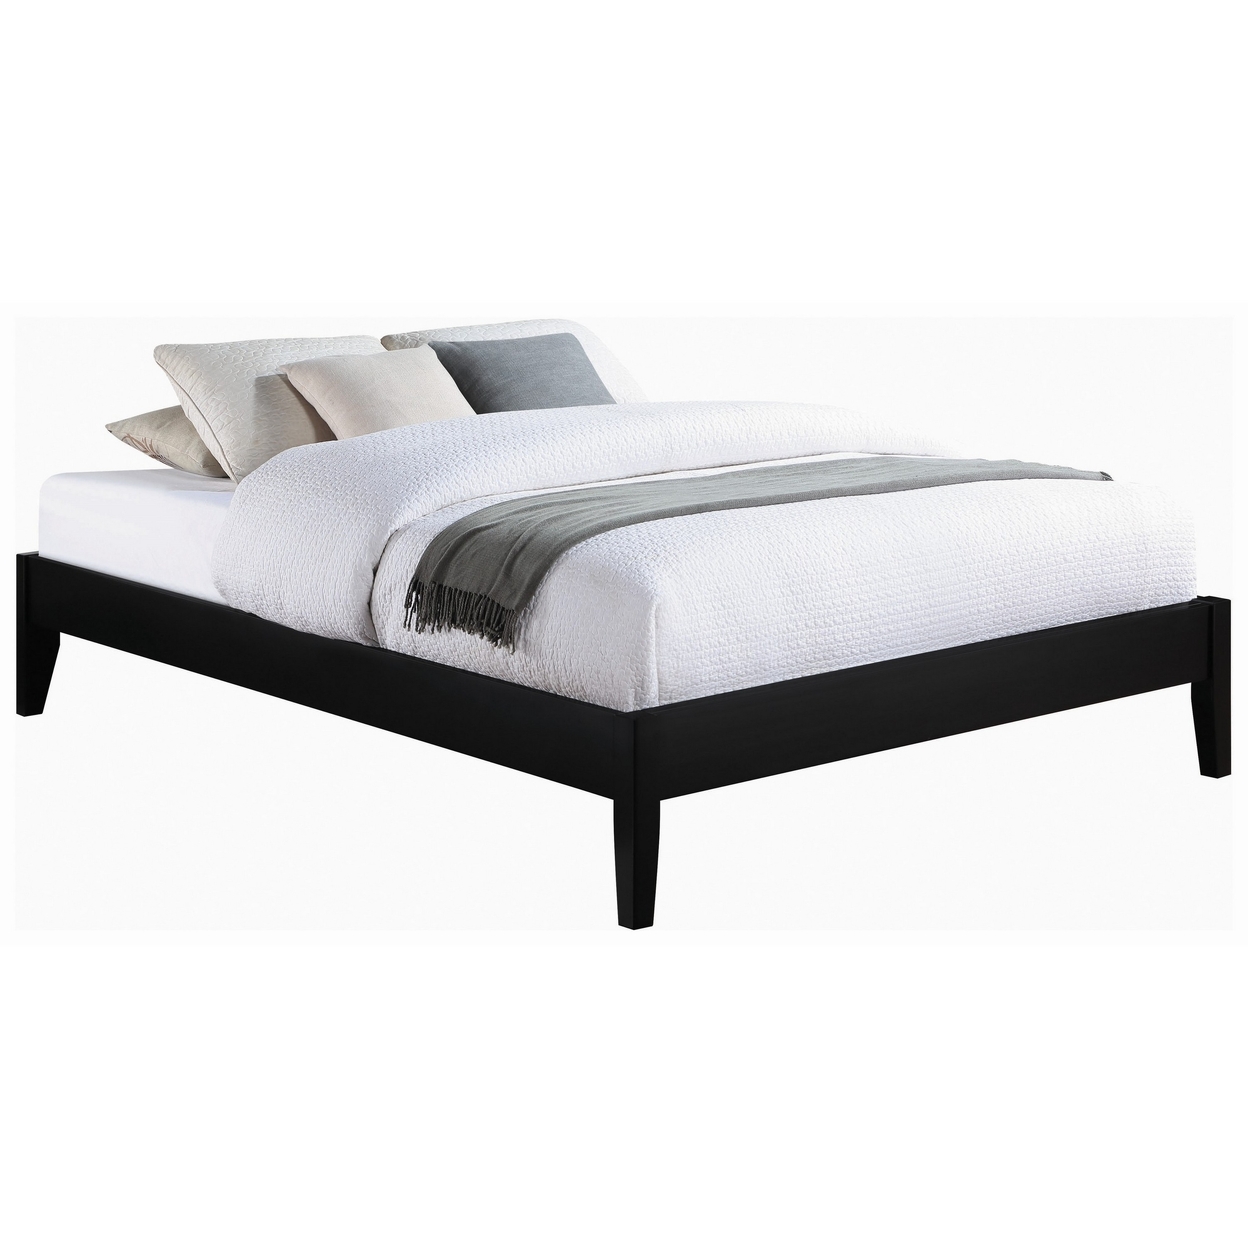 Cavi Modern Low Profile Platform Queen Size Bed, Panel Sides, Slats, Black- Saltoro Sherpi